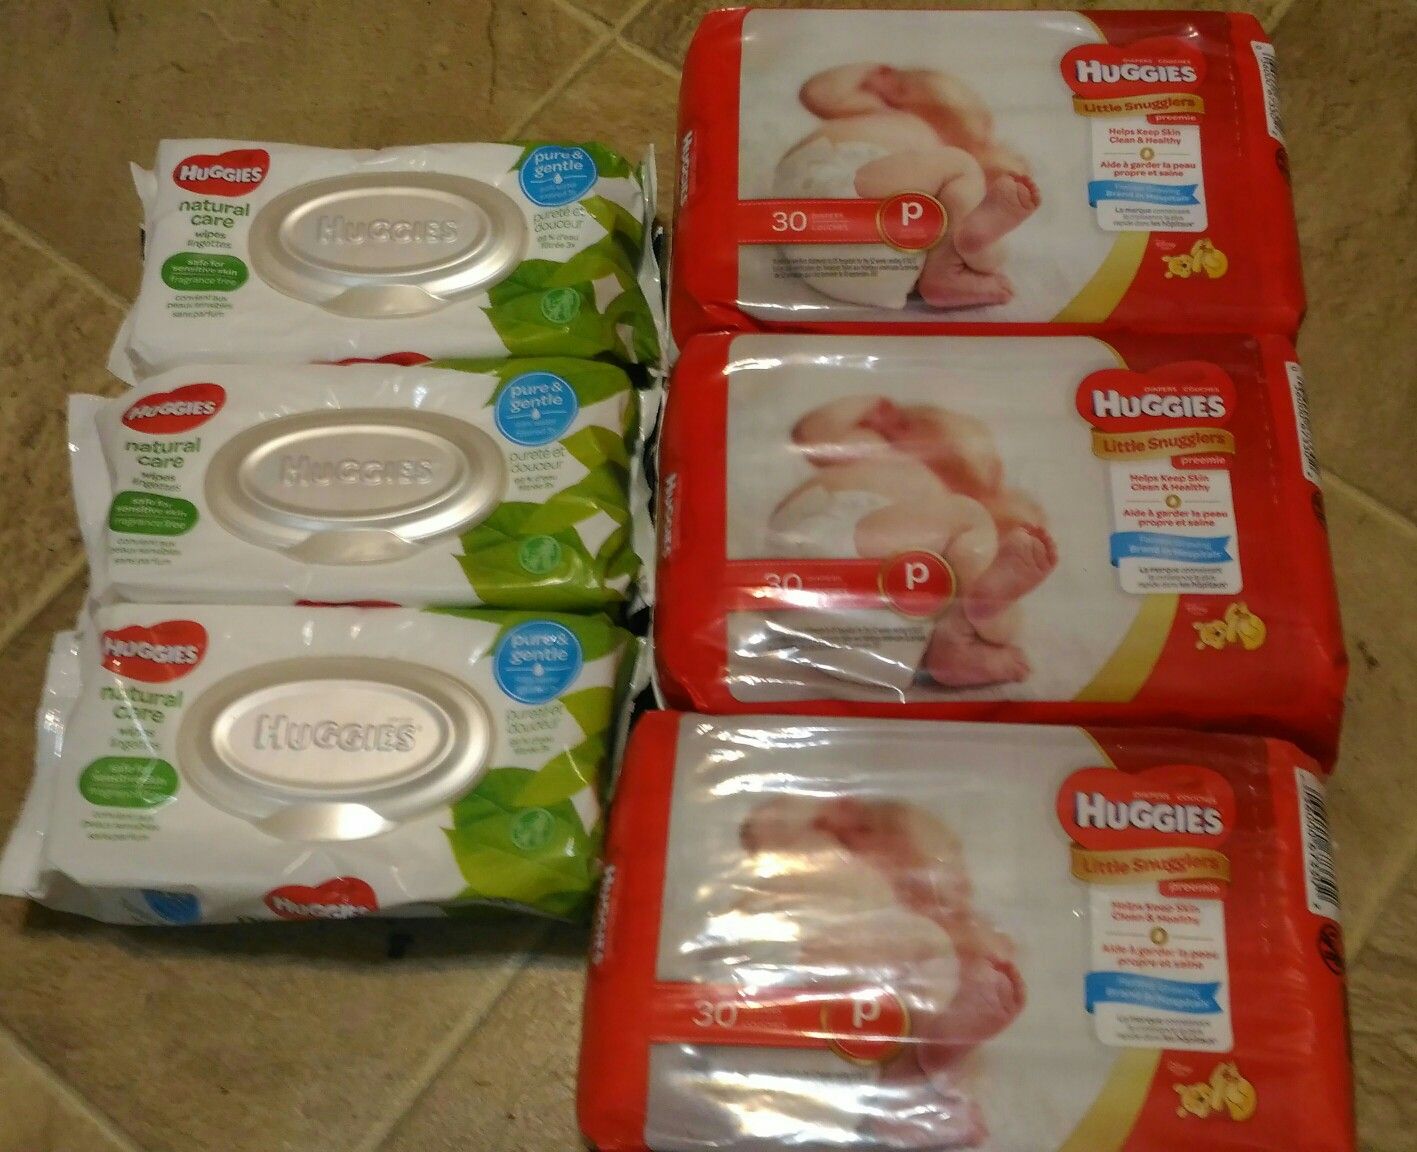 3 huggies diapers 30ct size P & 3 56ct huggies wipes